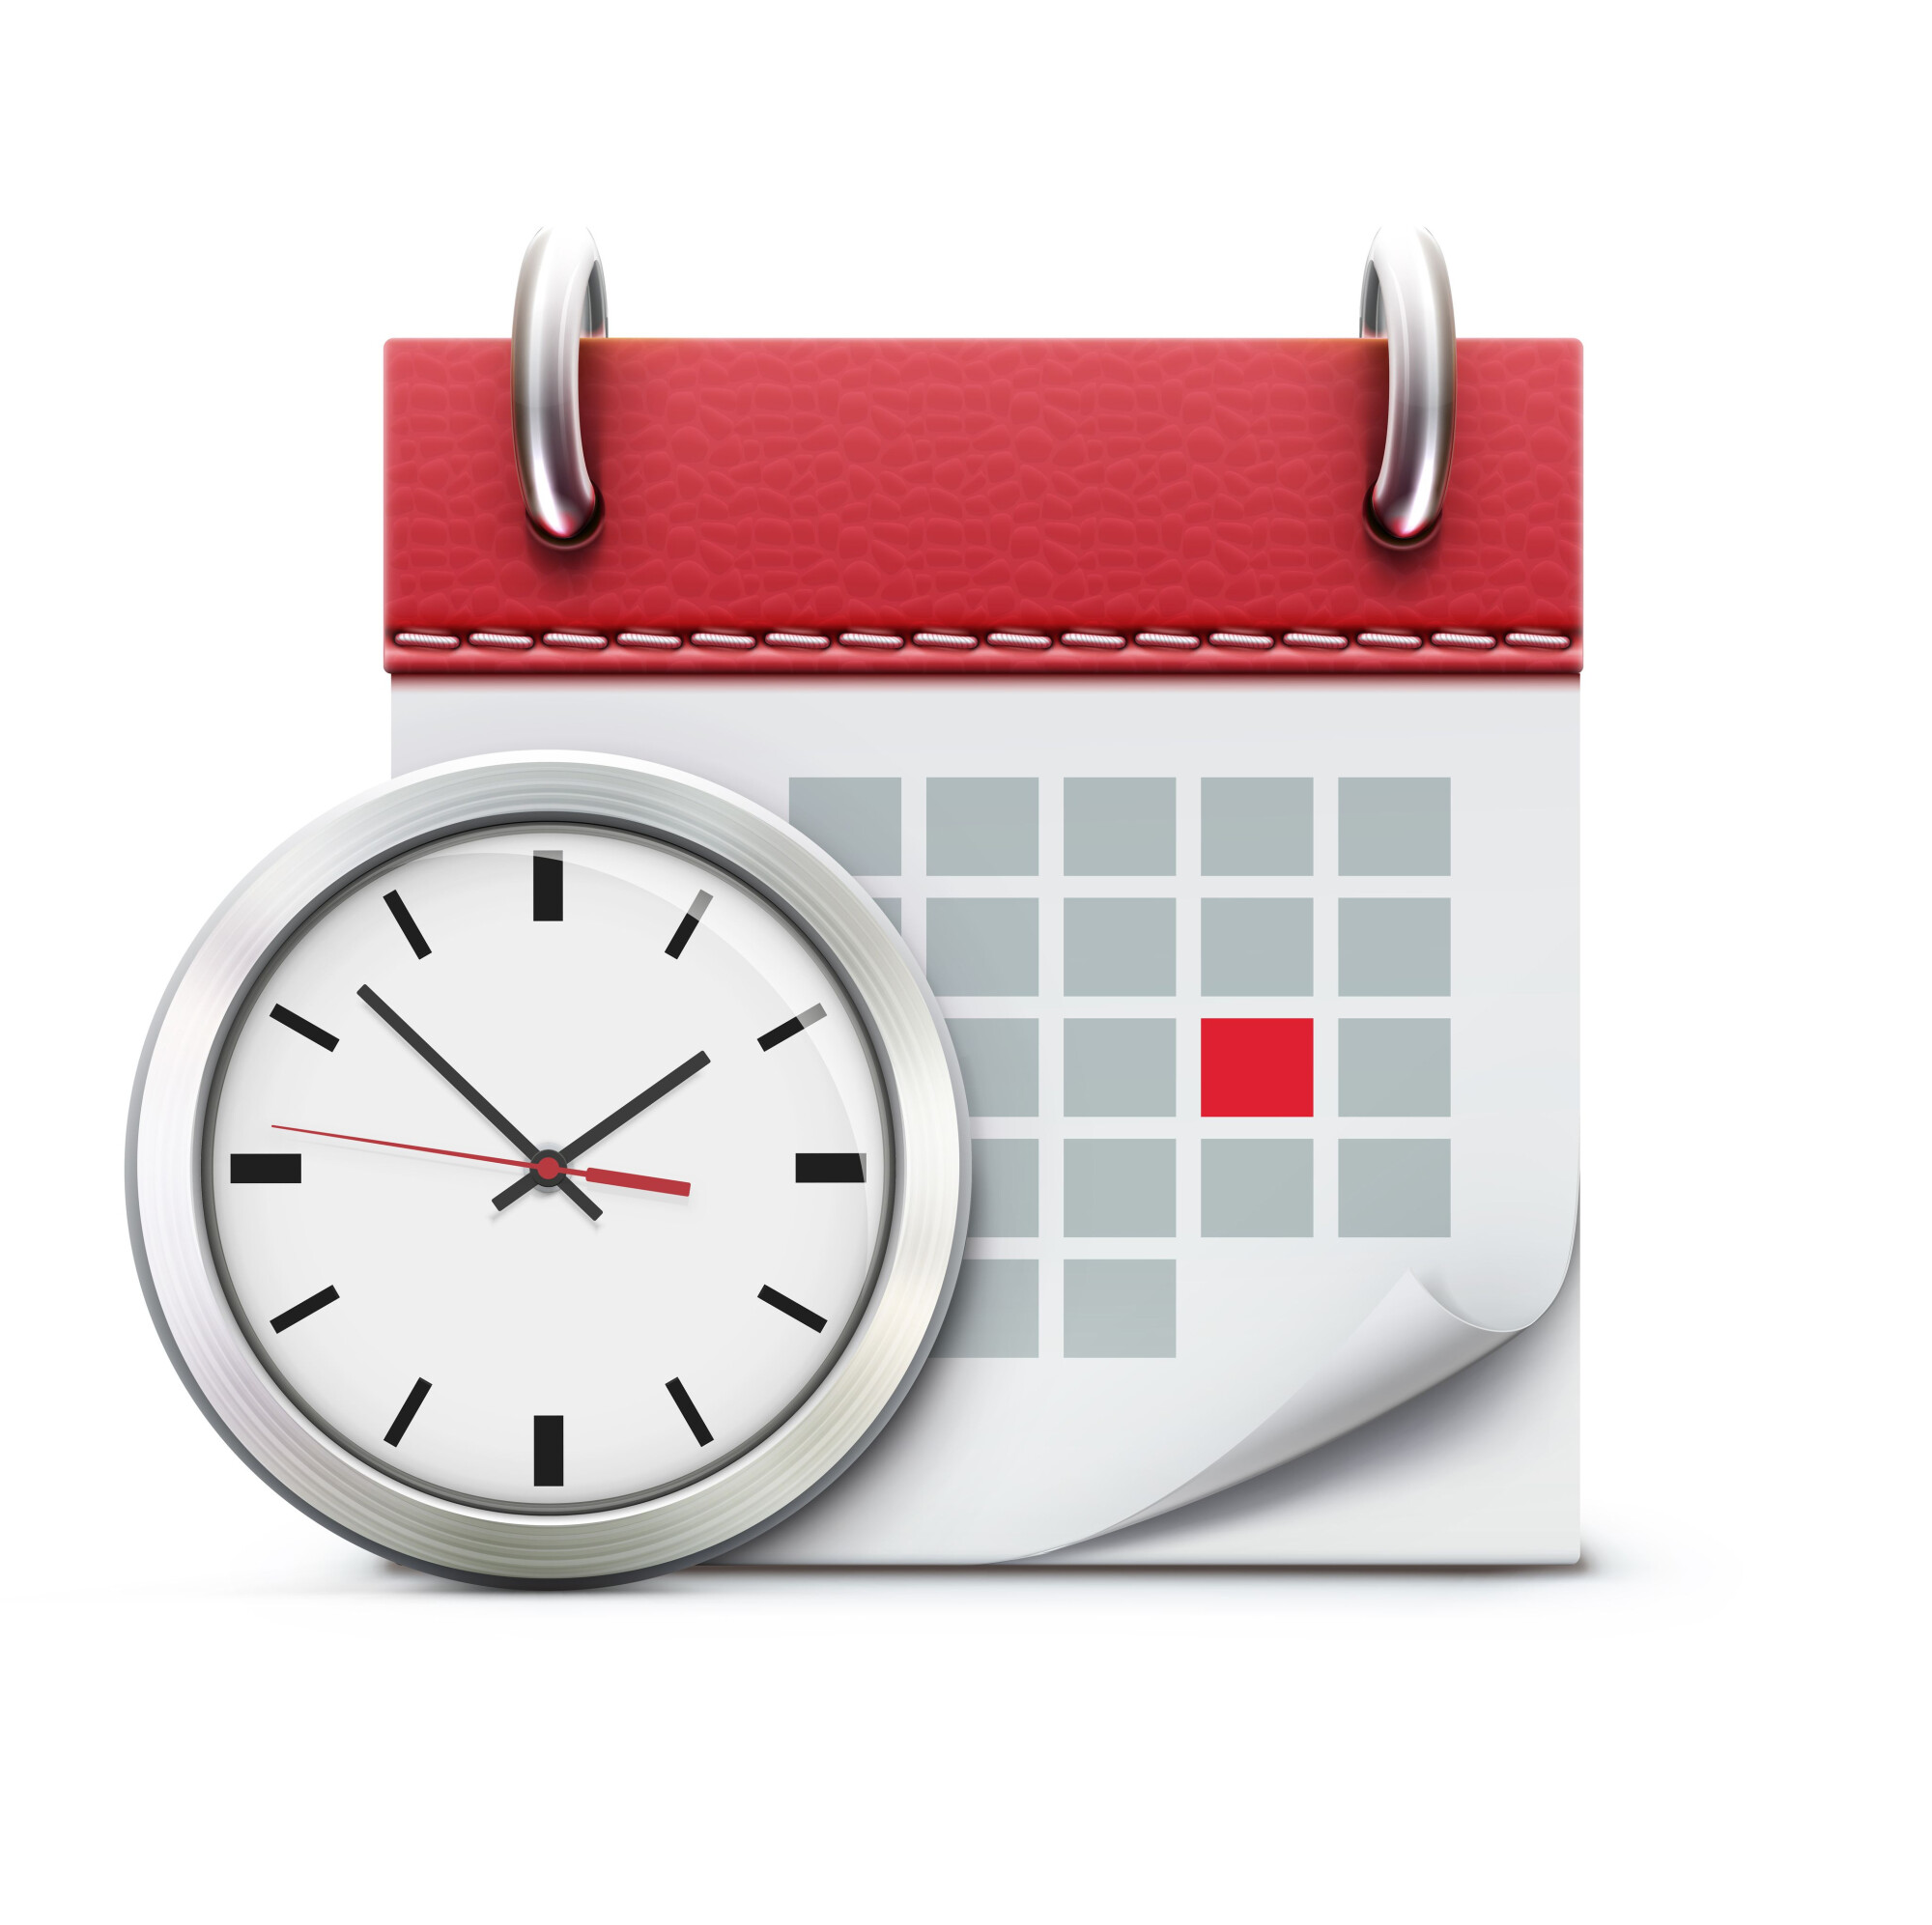 Metadata: image of clock and calendar